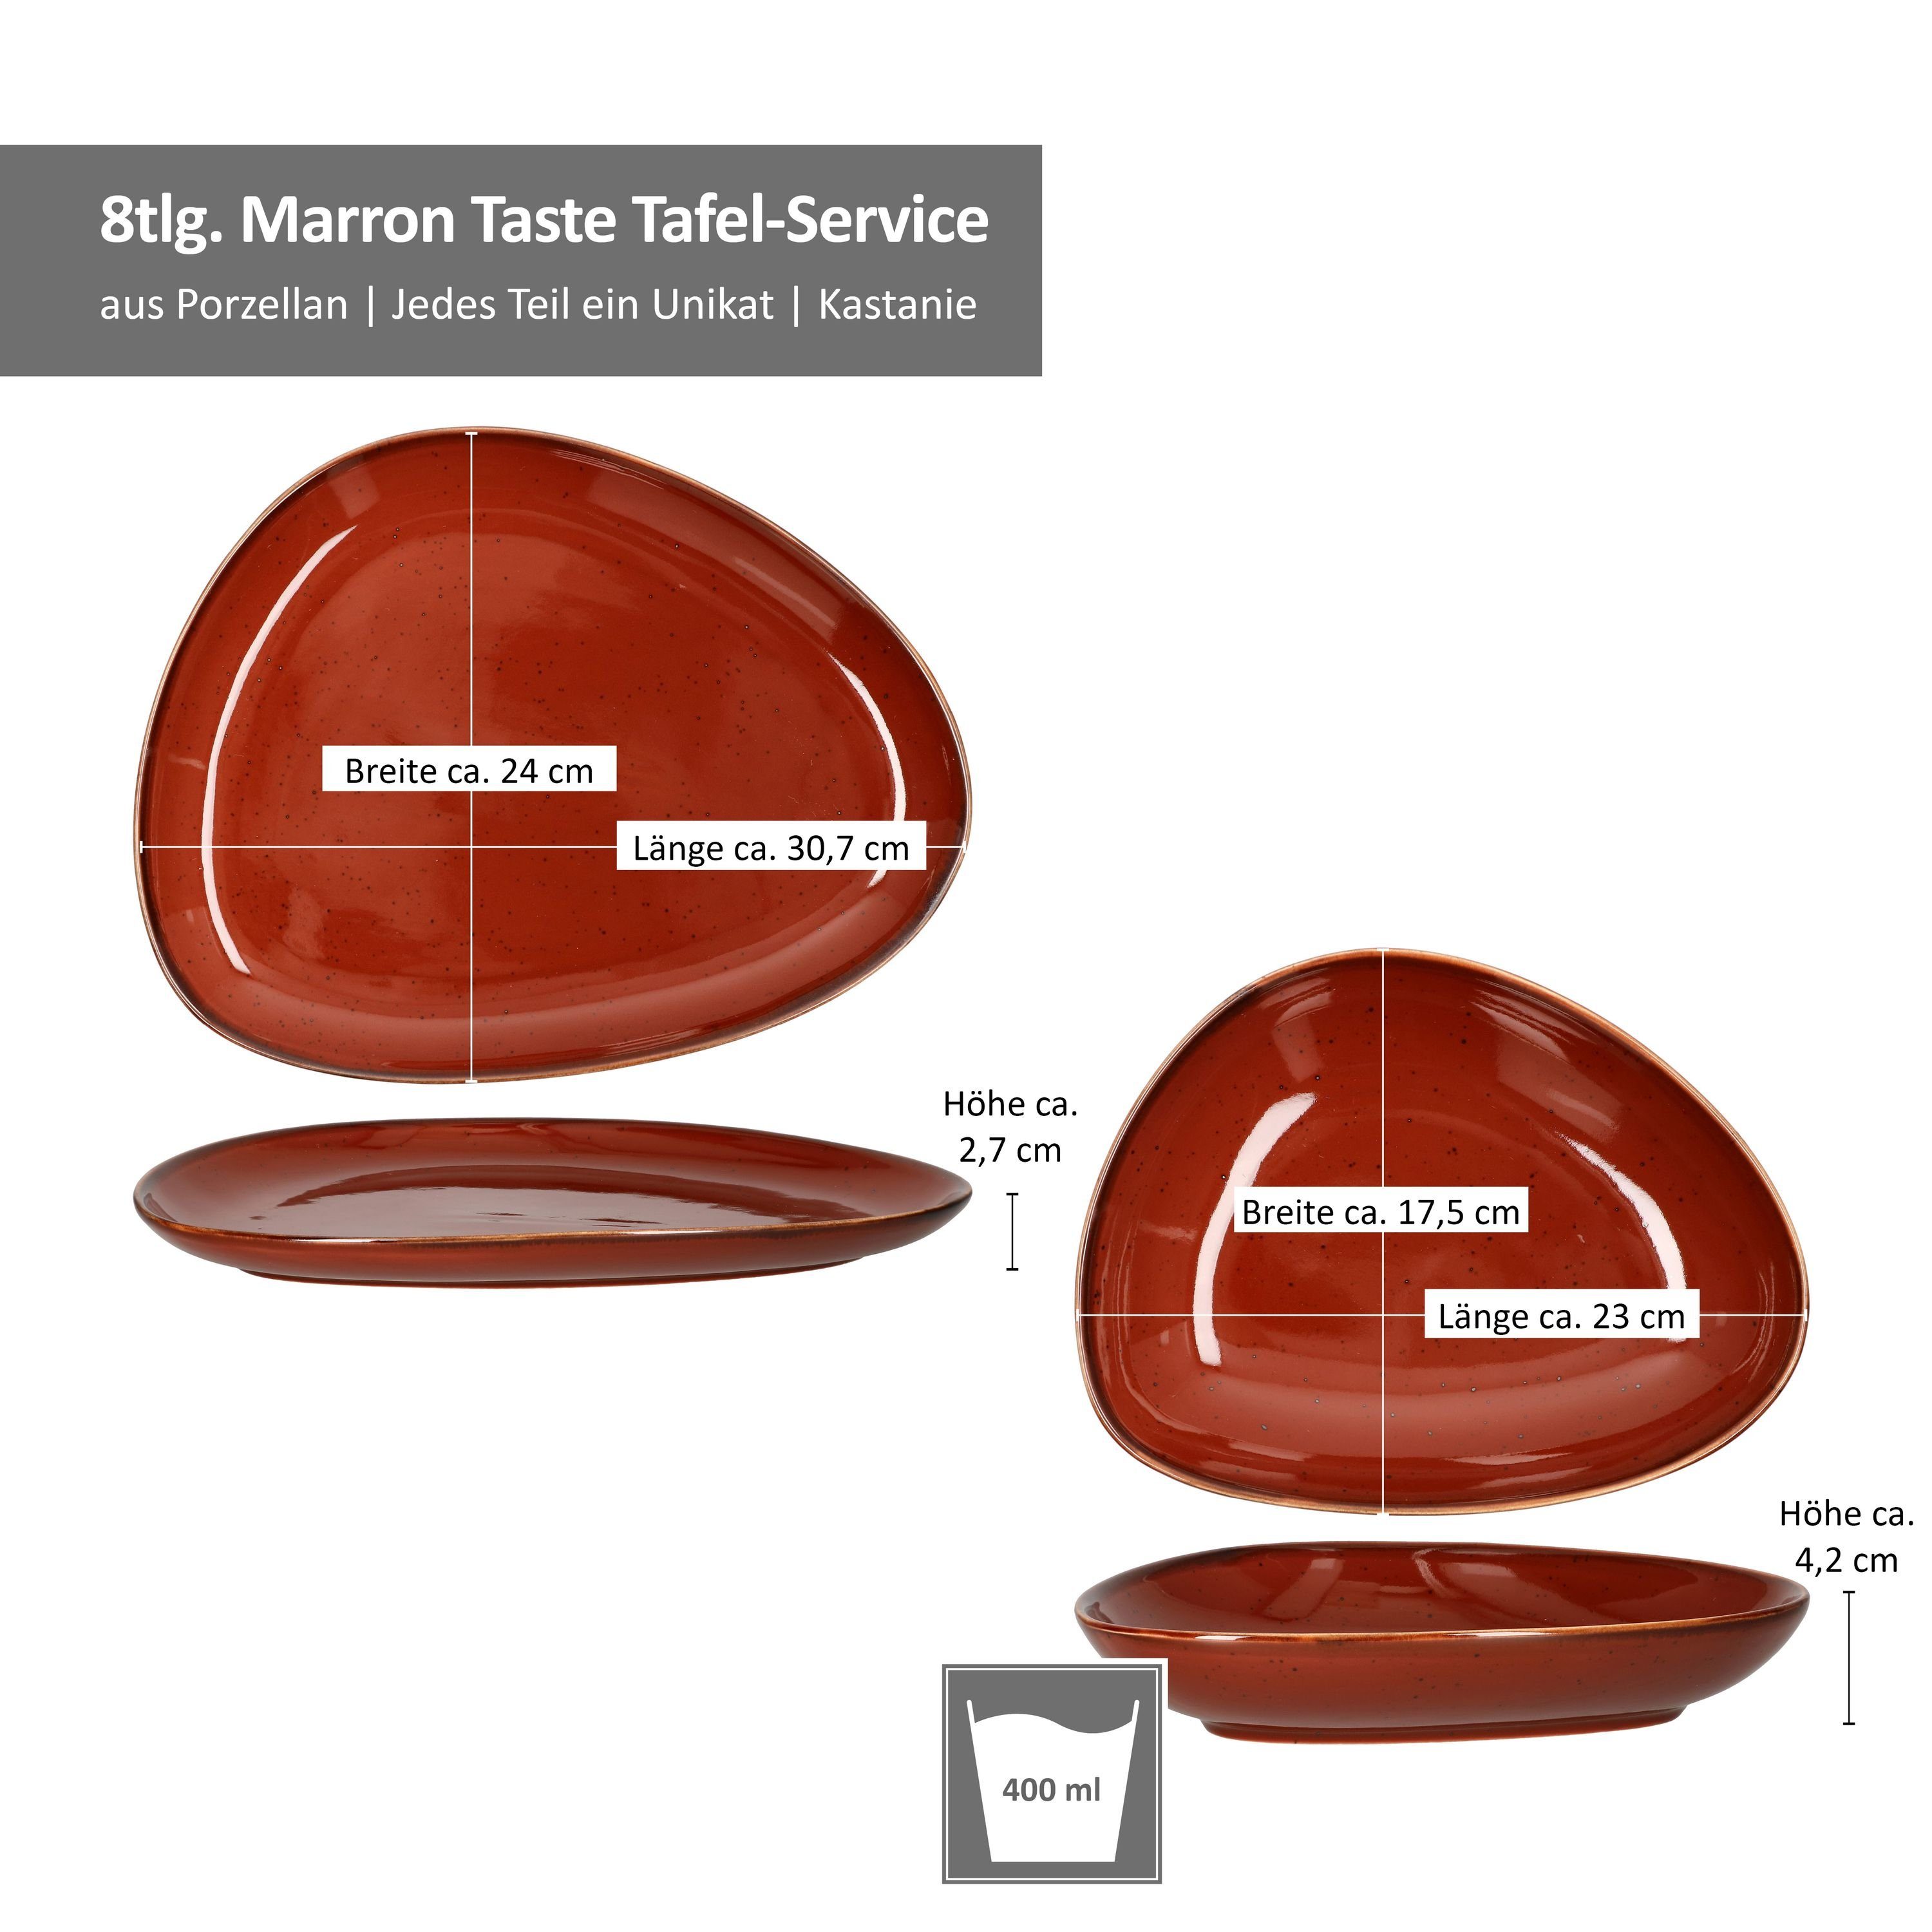 8tlg. 211511 MamboCat Marron Tafel + Service - Taste 211528 Tafelservice